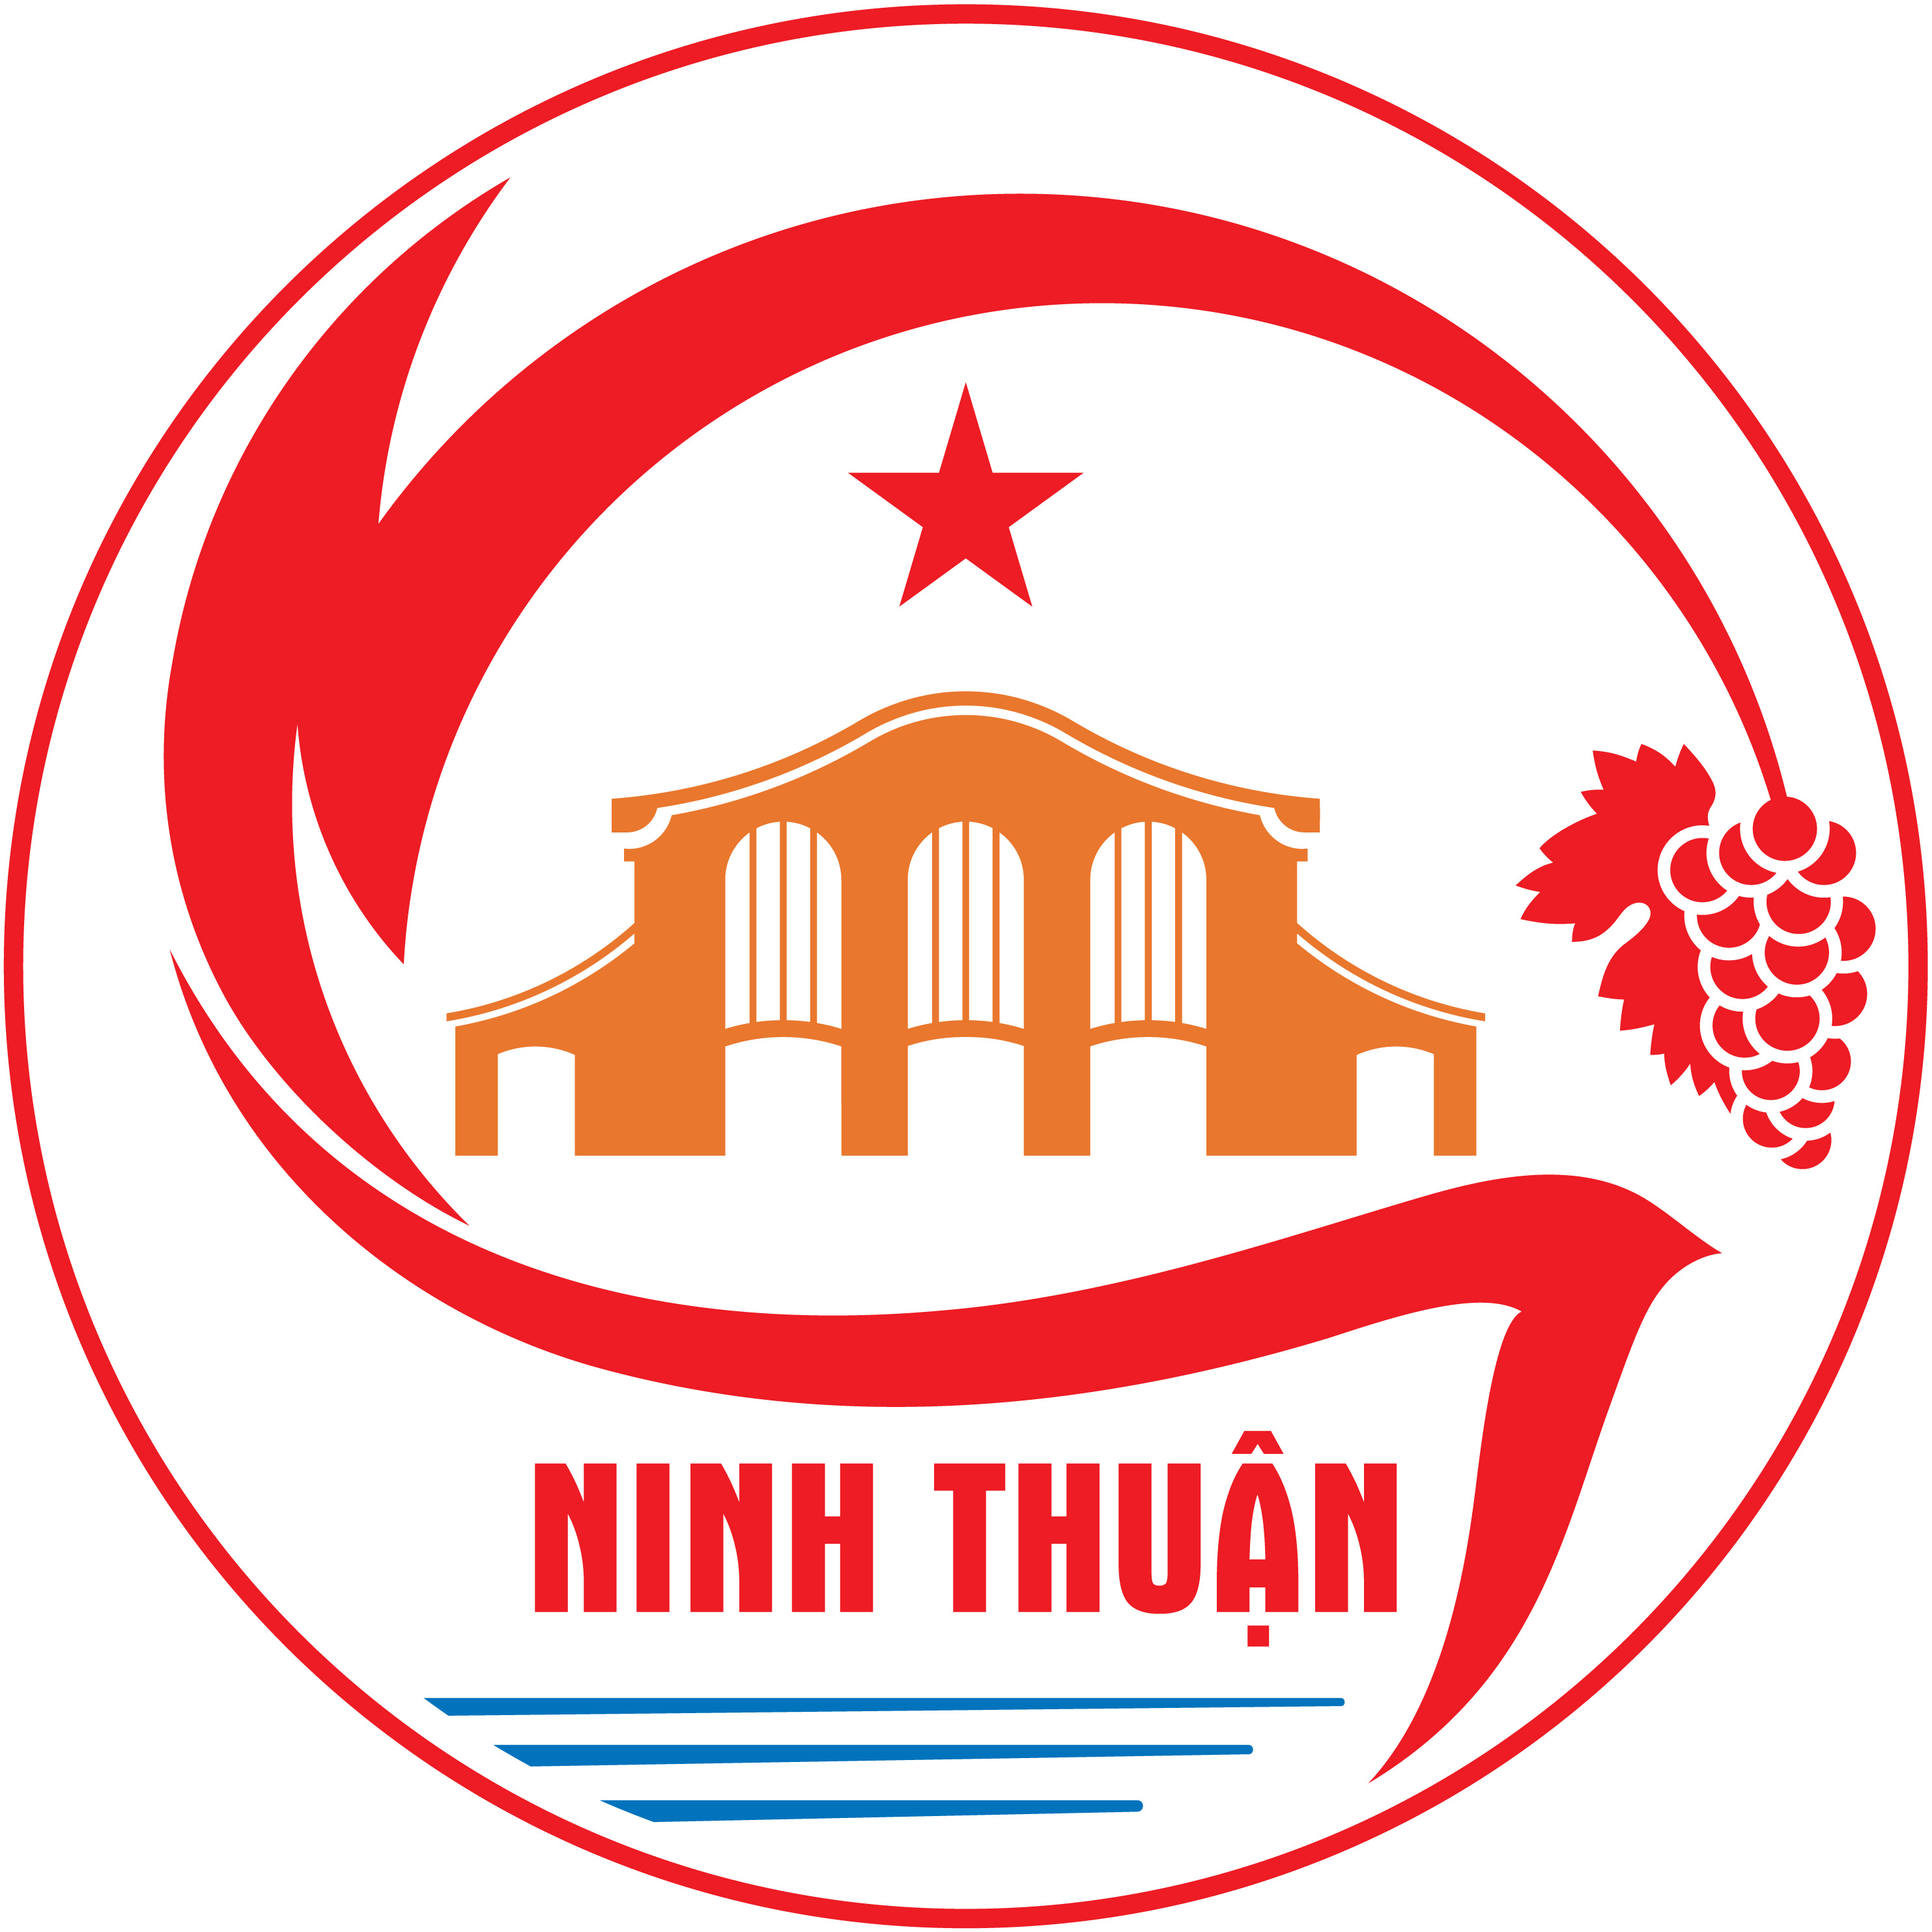 NINH THUAN IVESTMENT, TRADE AND TOURISM PROMOTION CENTER (ITTC NINH THUAN)